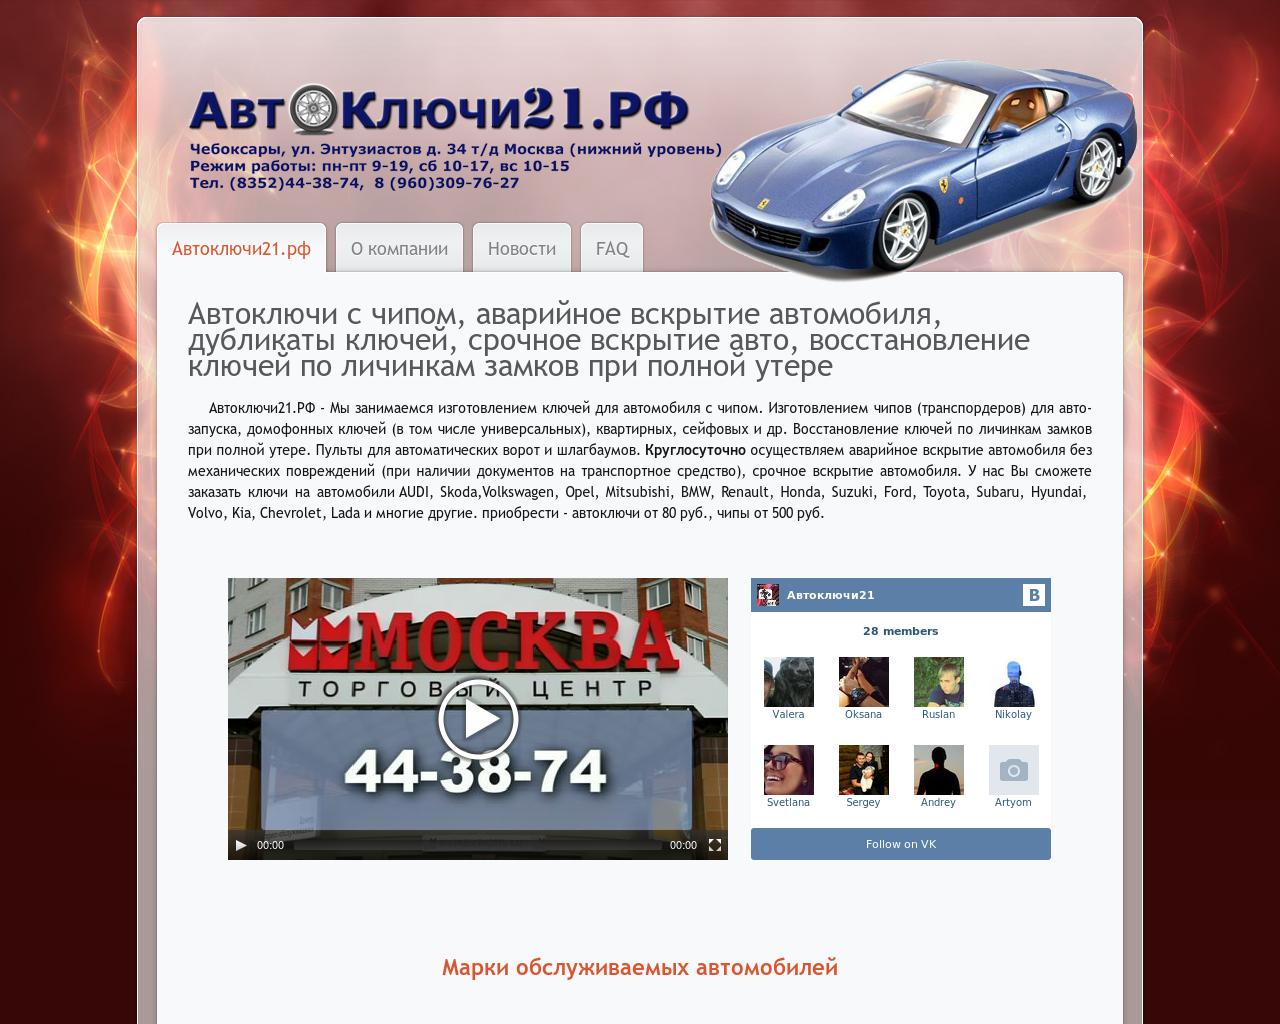 Изображение сайта автоключи21.рф в разрешении 1280x1024